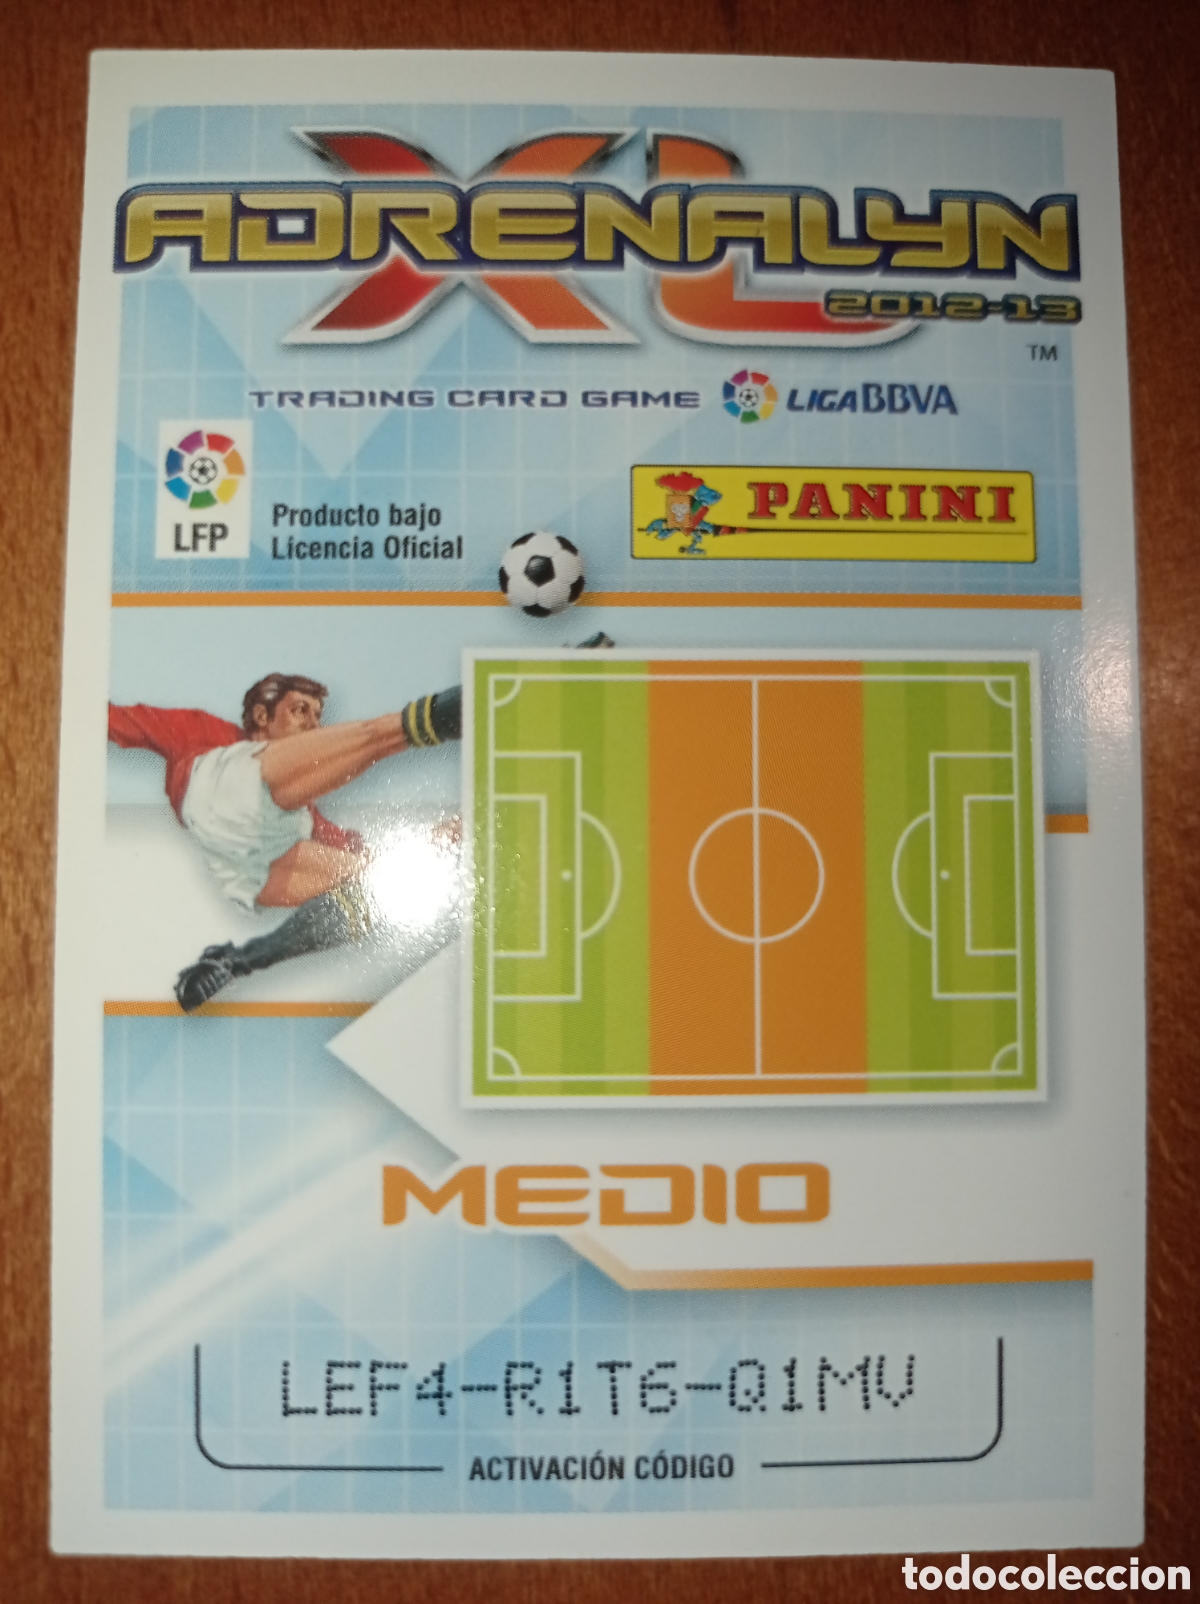 Fútbol 2011, Campeonato Petrobras 2011 Adrenalyn XL (Panini, 2011